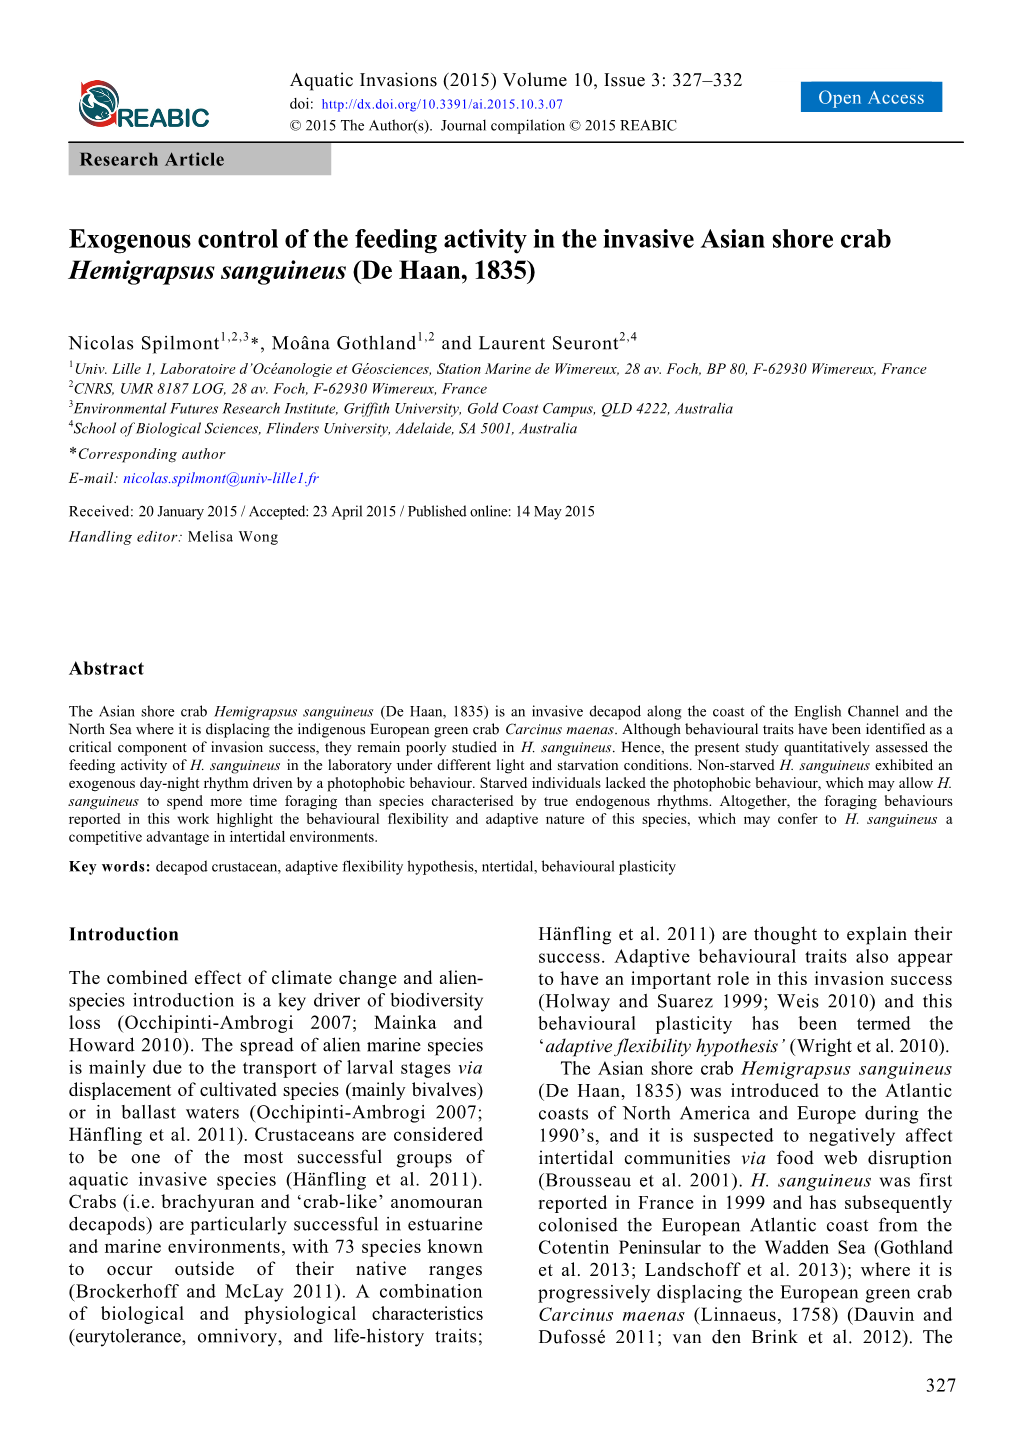 Exogenous Control of the Feeding Activity in the Invasive Asian Shore Crab Hemigrapsus Sanguineus (De Haan, 1835)